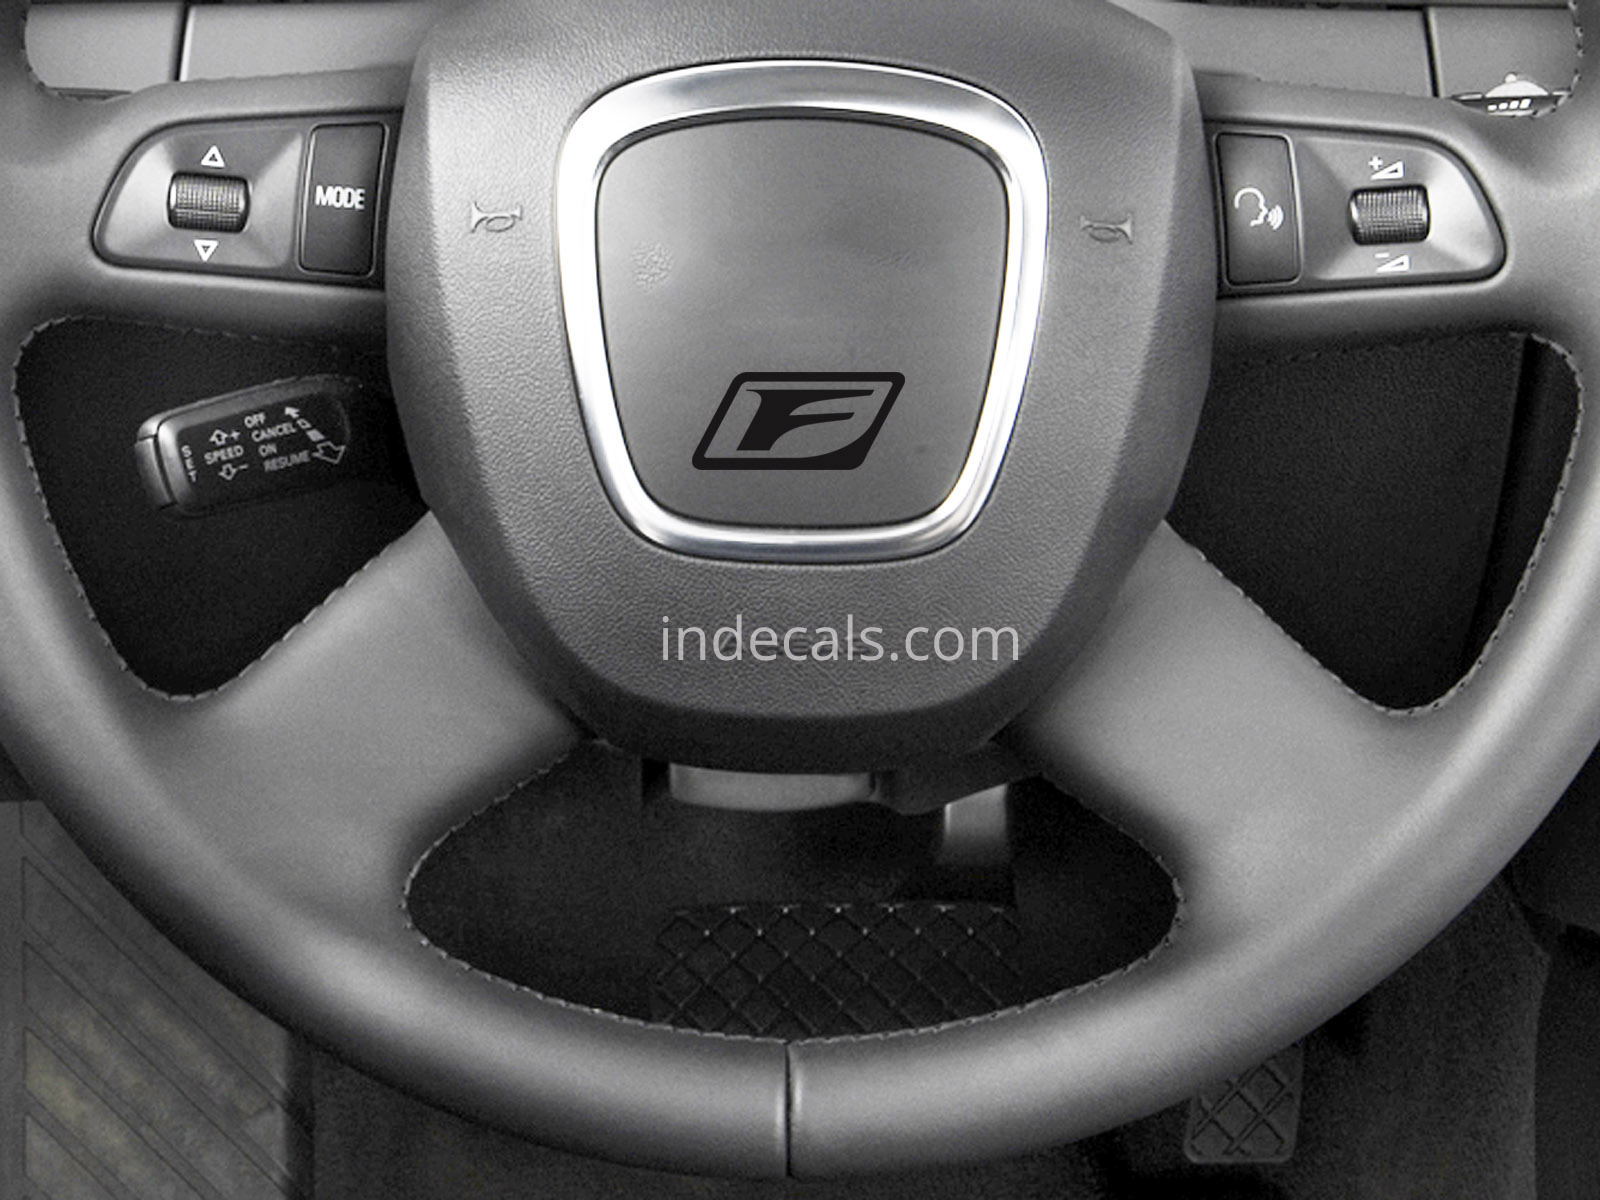 3 x Lexus F-sport Stickers for Steering Wheel - Black